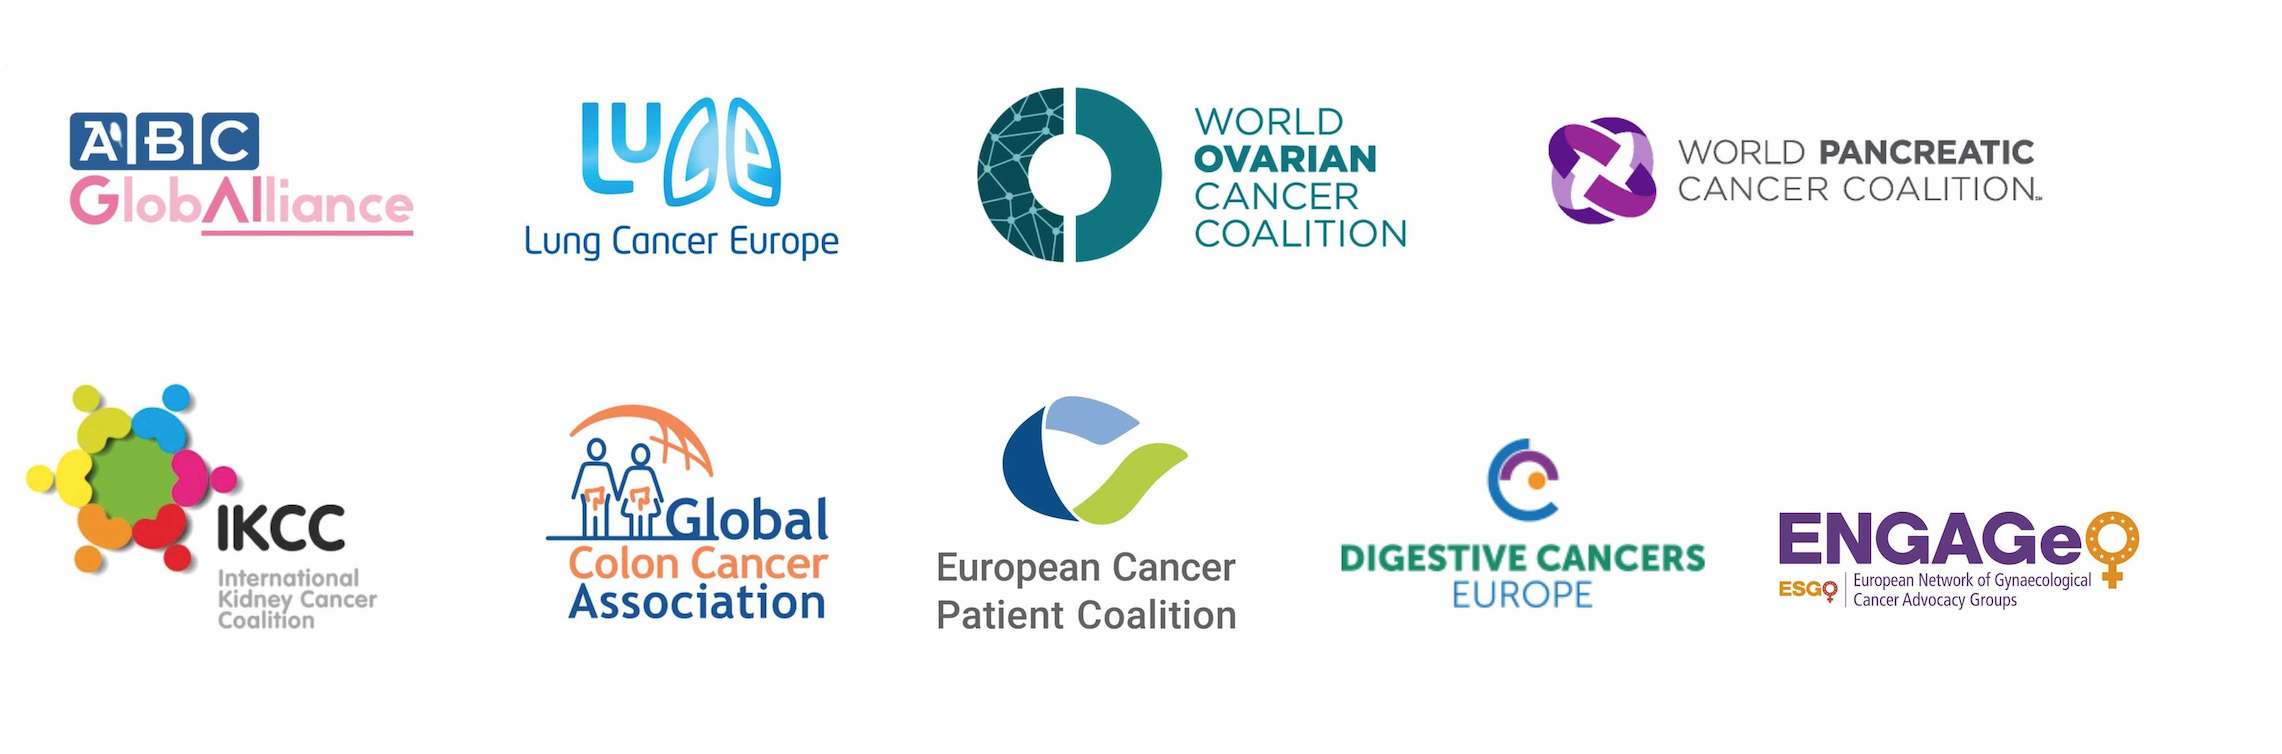 NNSC_Partners-Global联盟, 肺癌欧洲, Word ovarian, Word pancreatic, IKKC, 全球硬币癌症协会, 欧洲癌症患者, Digestive cancer, ENGAGe